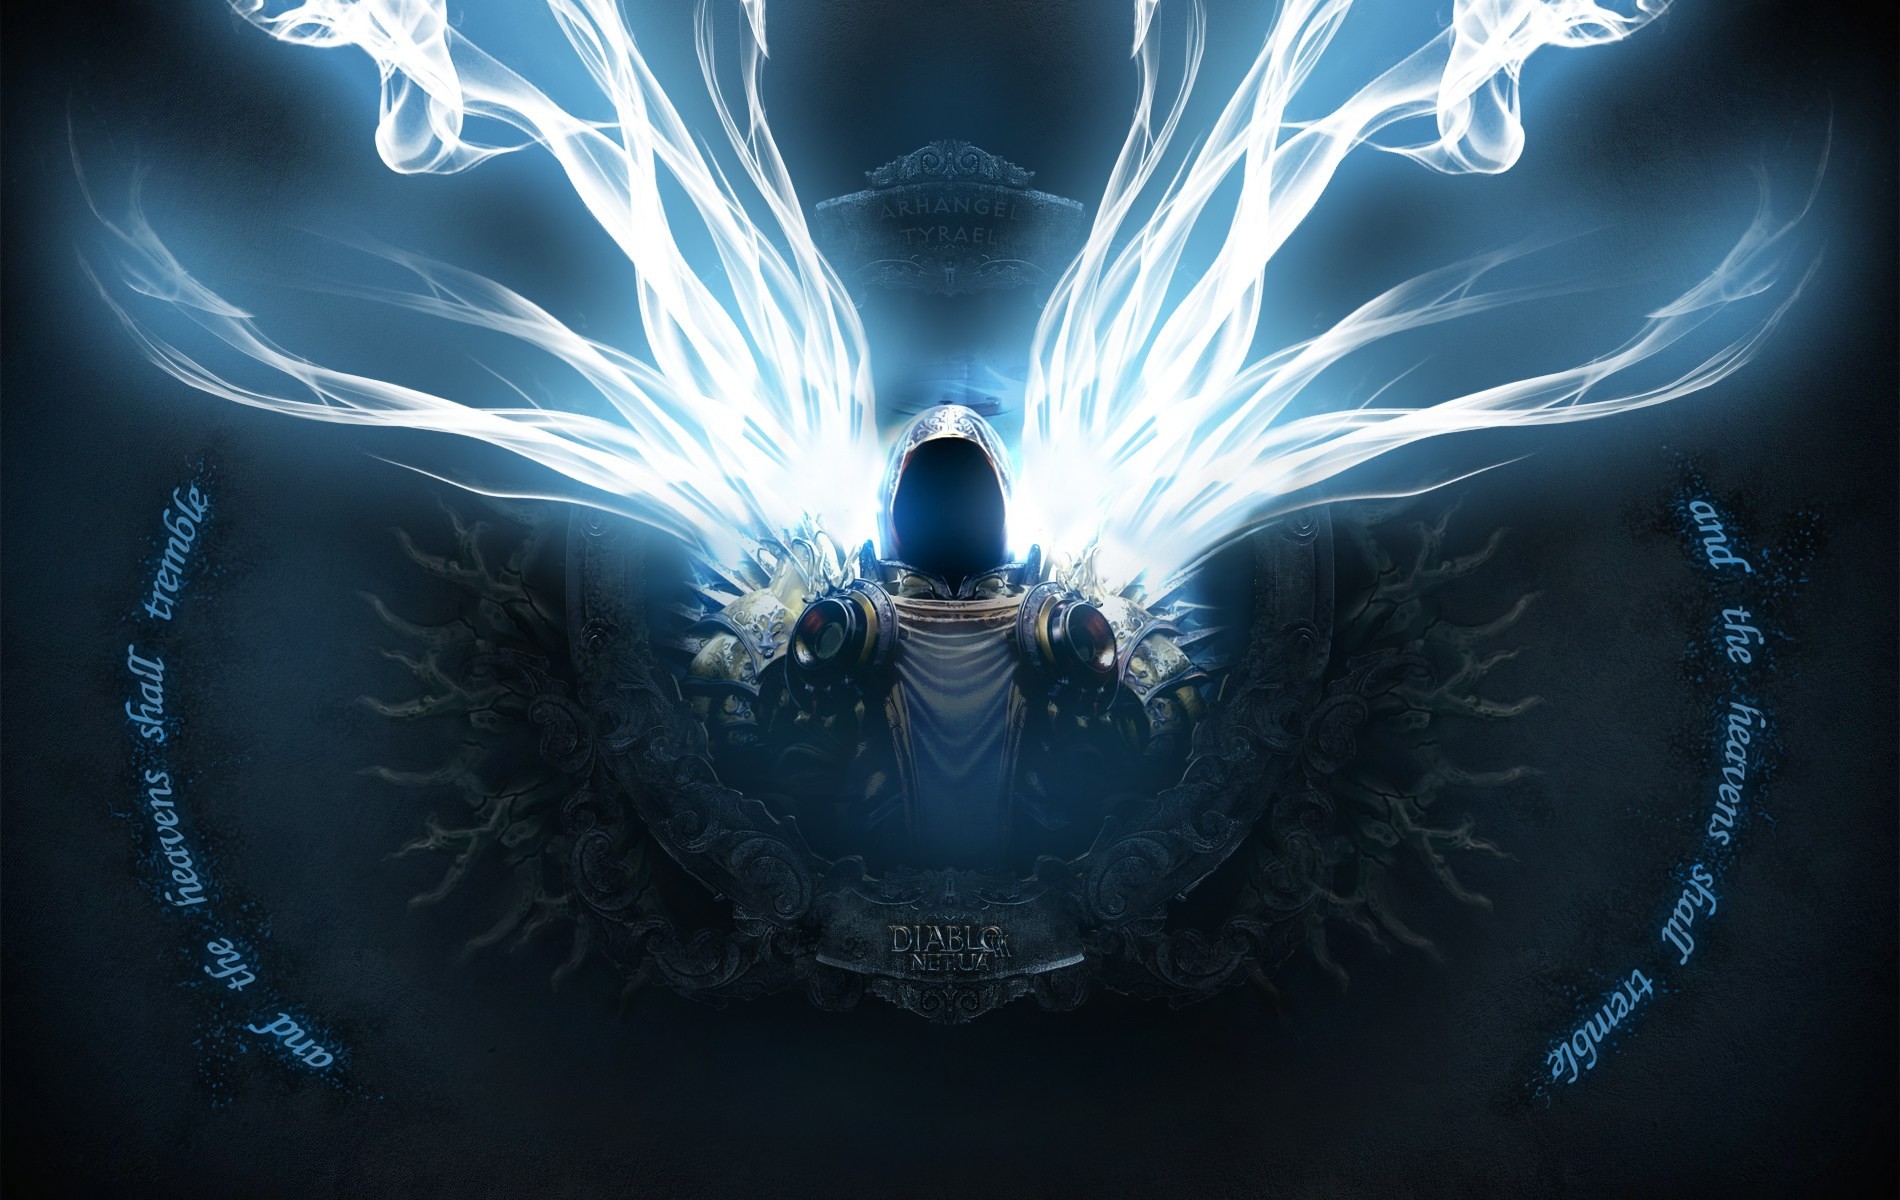 Wallpaper, illustration, Blizzard Entertainment, Diablo III, darkness, screenshot, 1900x1200 px, computer wallpaper, fractal art, special effects, outer space 1900x1200